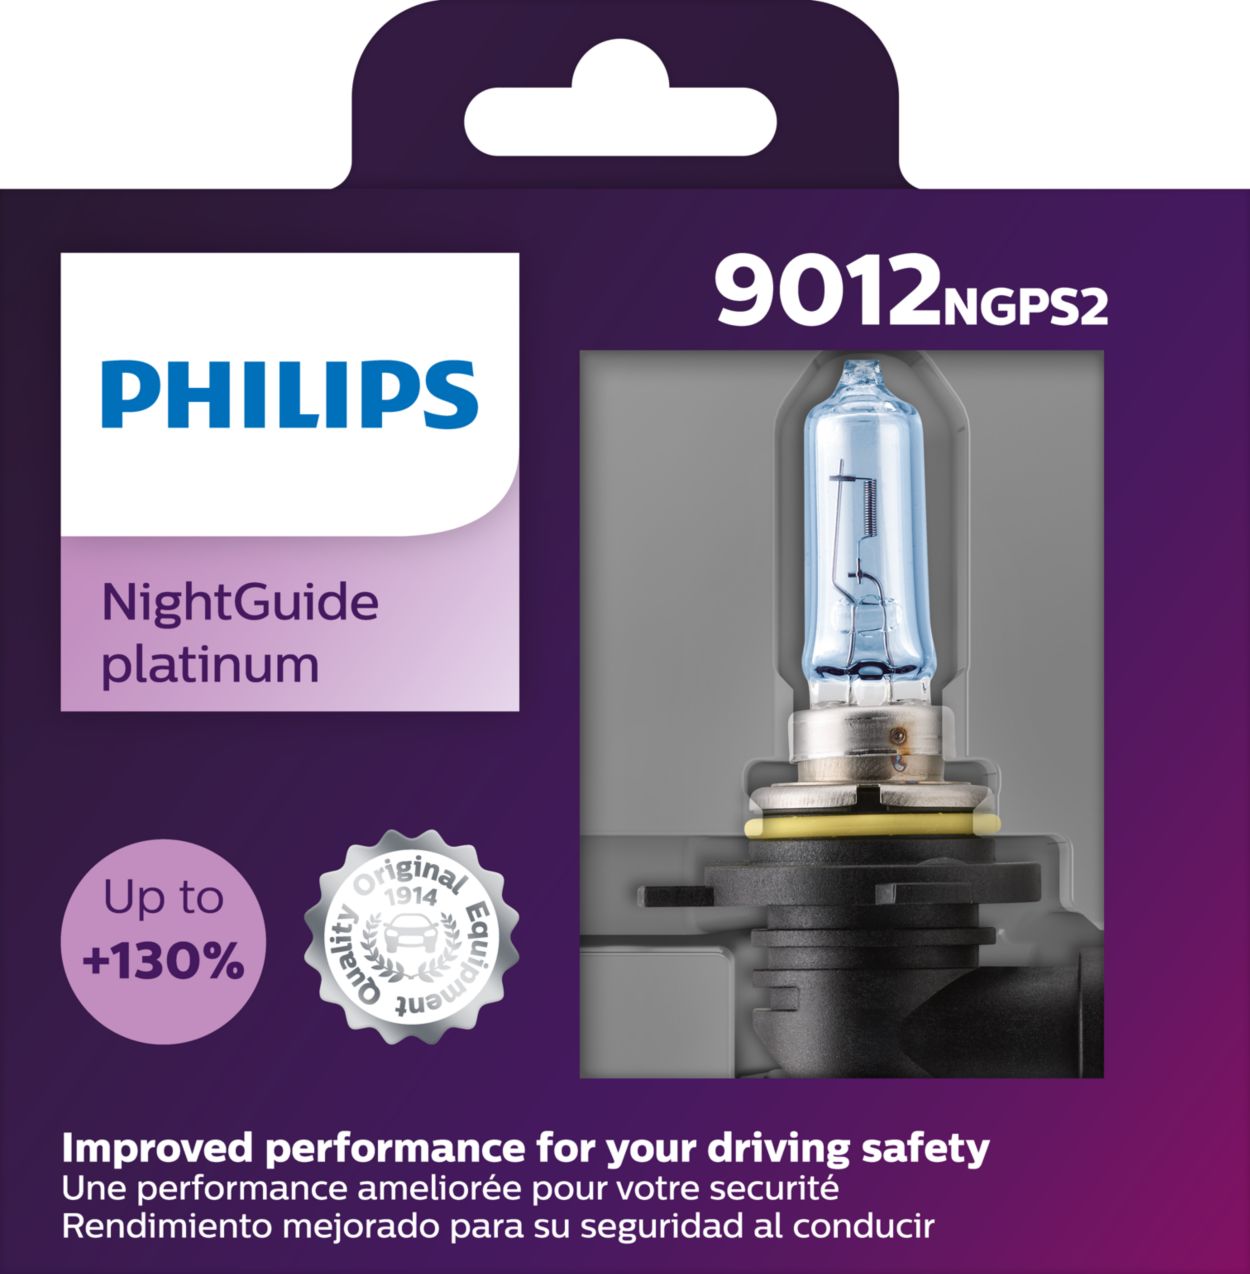 Philips 9012 HIR2 Standard Halogen Headlight Bulb, 1 Pack